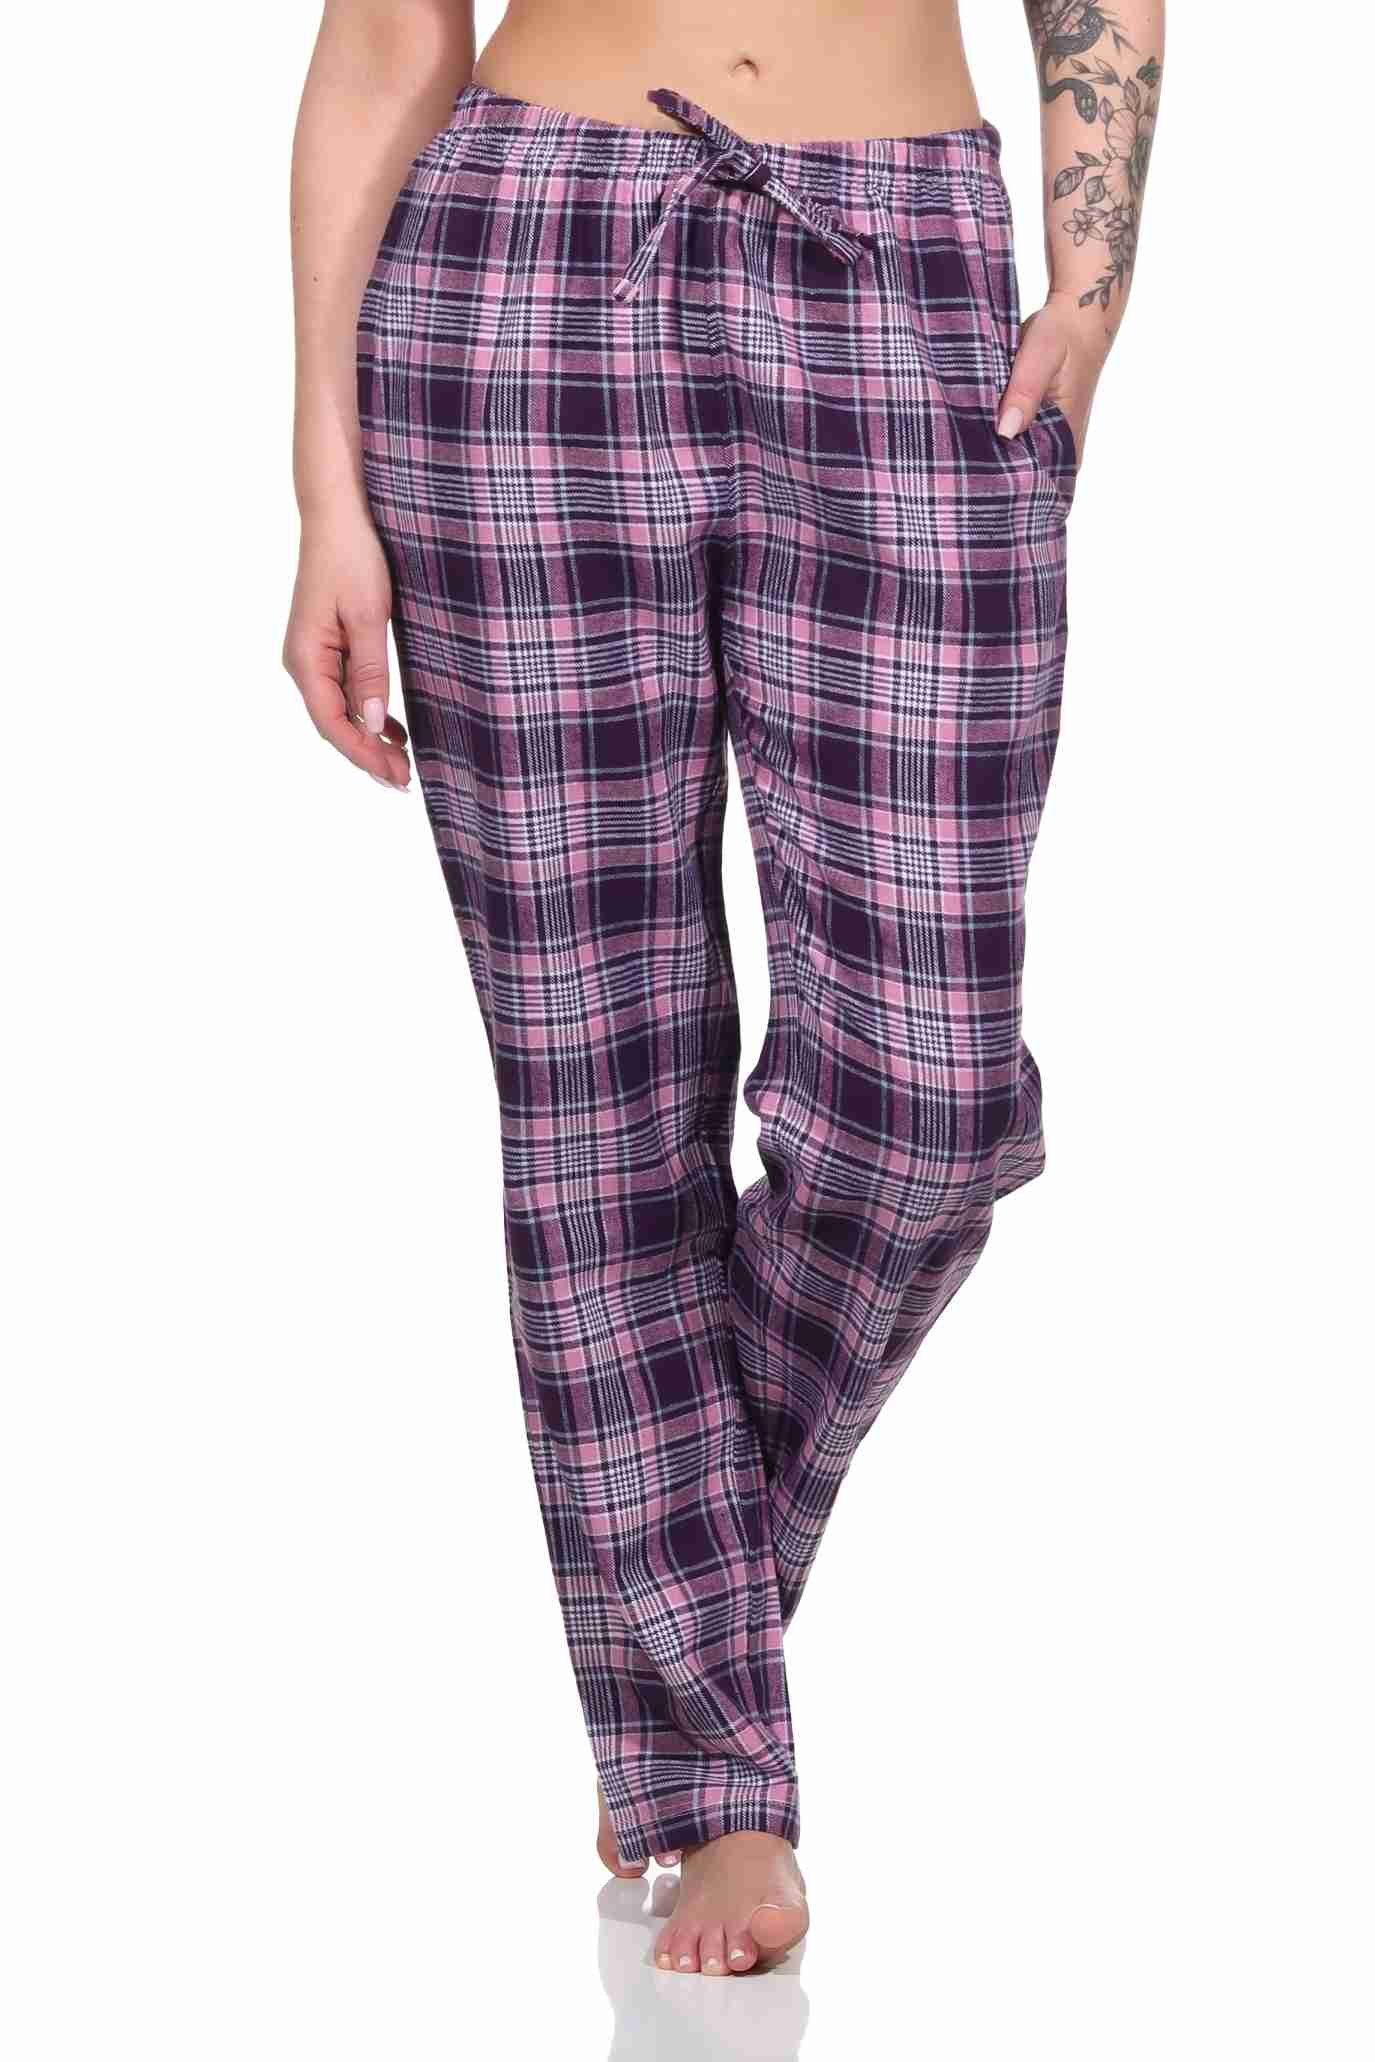 Pyjama Normann Dame Flanell aus Baumwolle relaxen Schlafanzug Hose kariert beere zum ideal